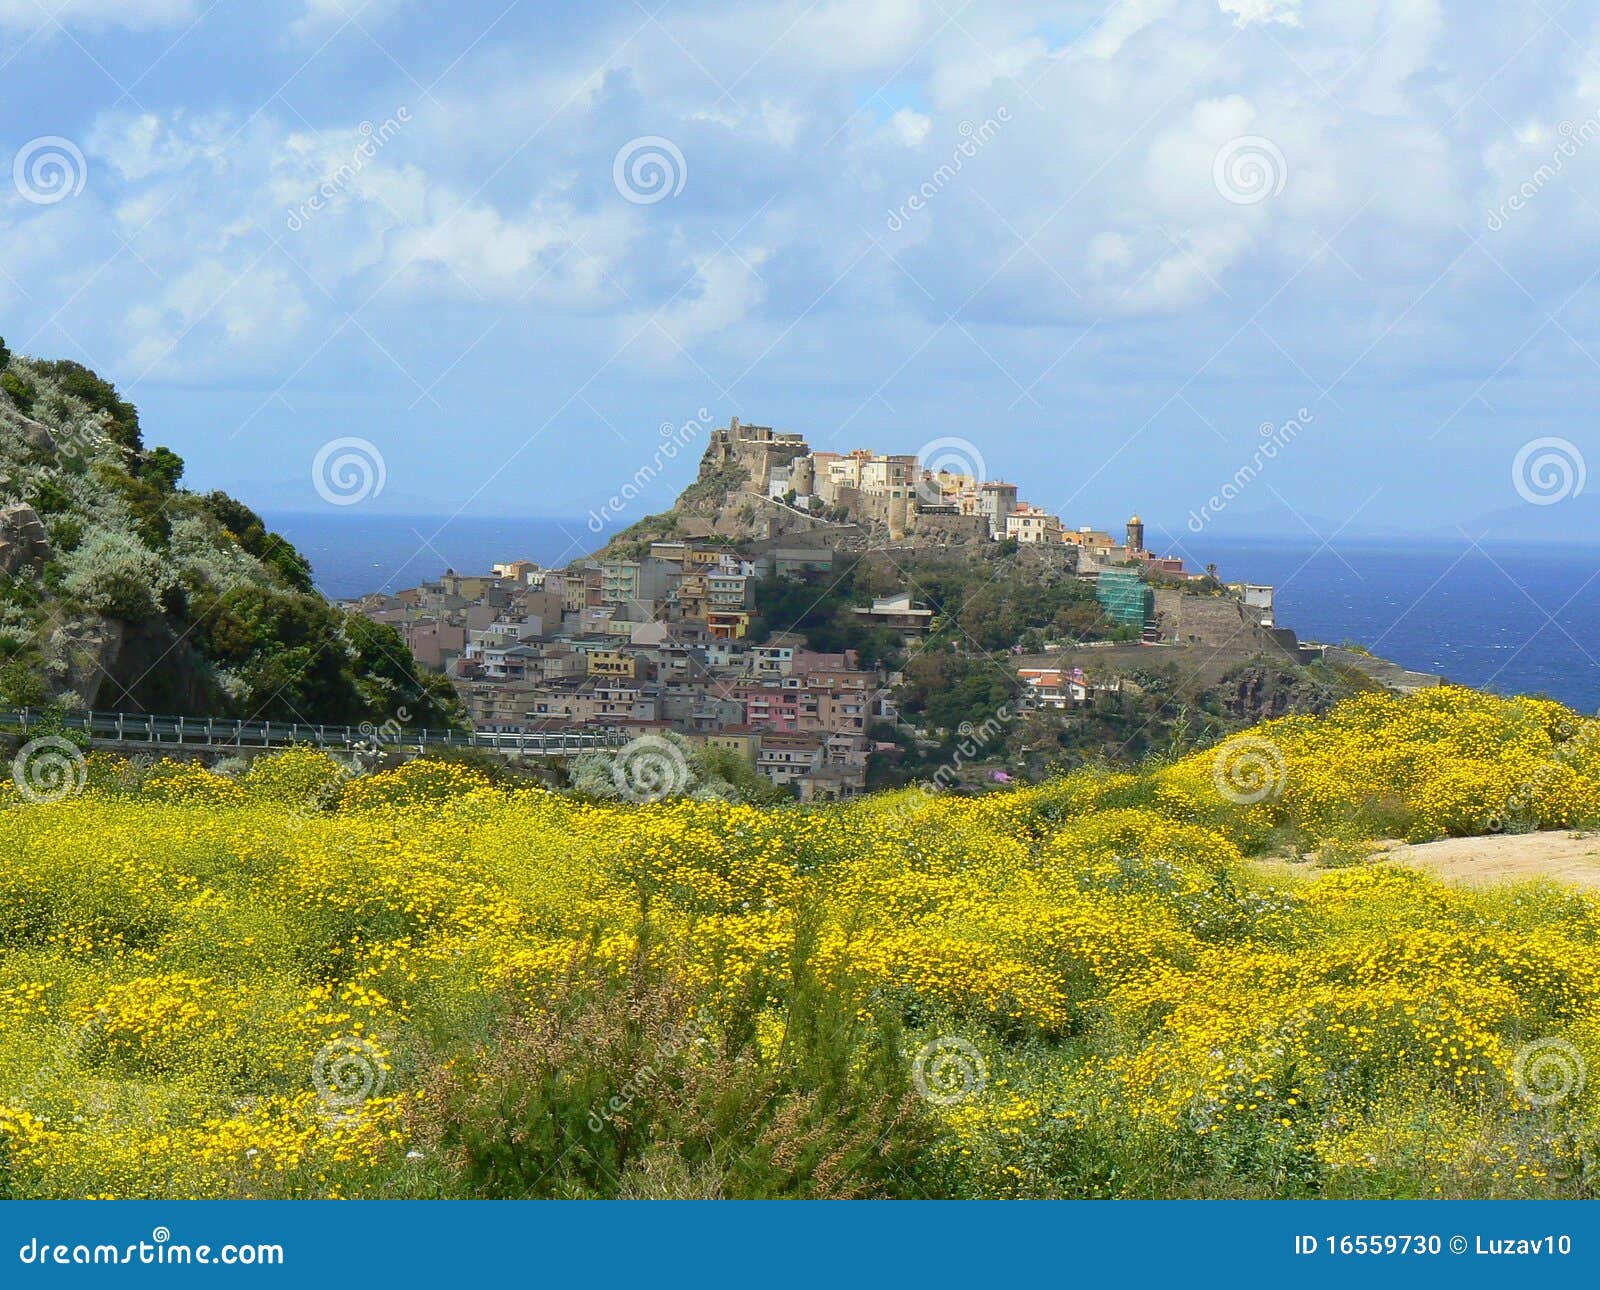 ancient town of castelsardo, sardinia